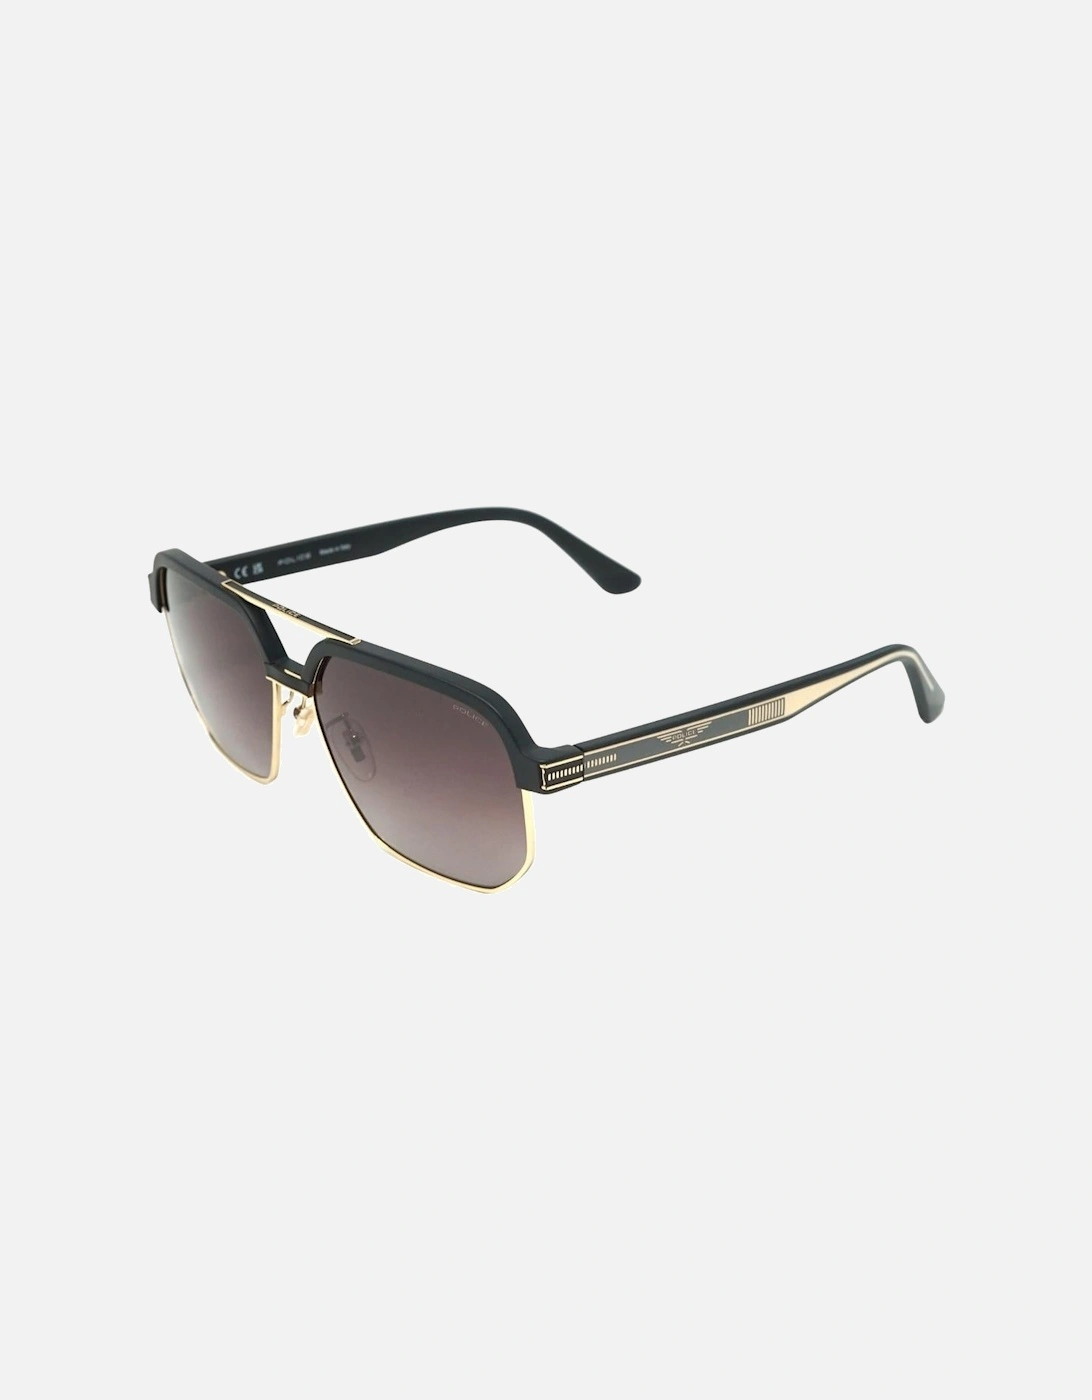 SPLF11M 0302 Gold Sunglasses